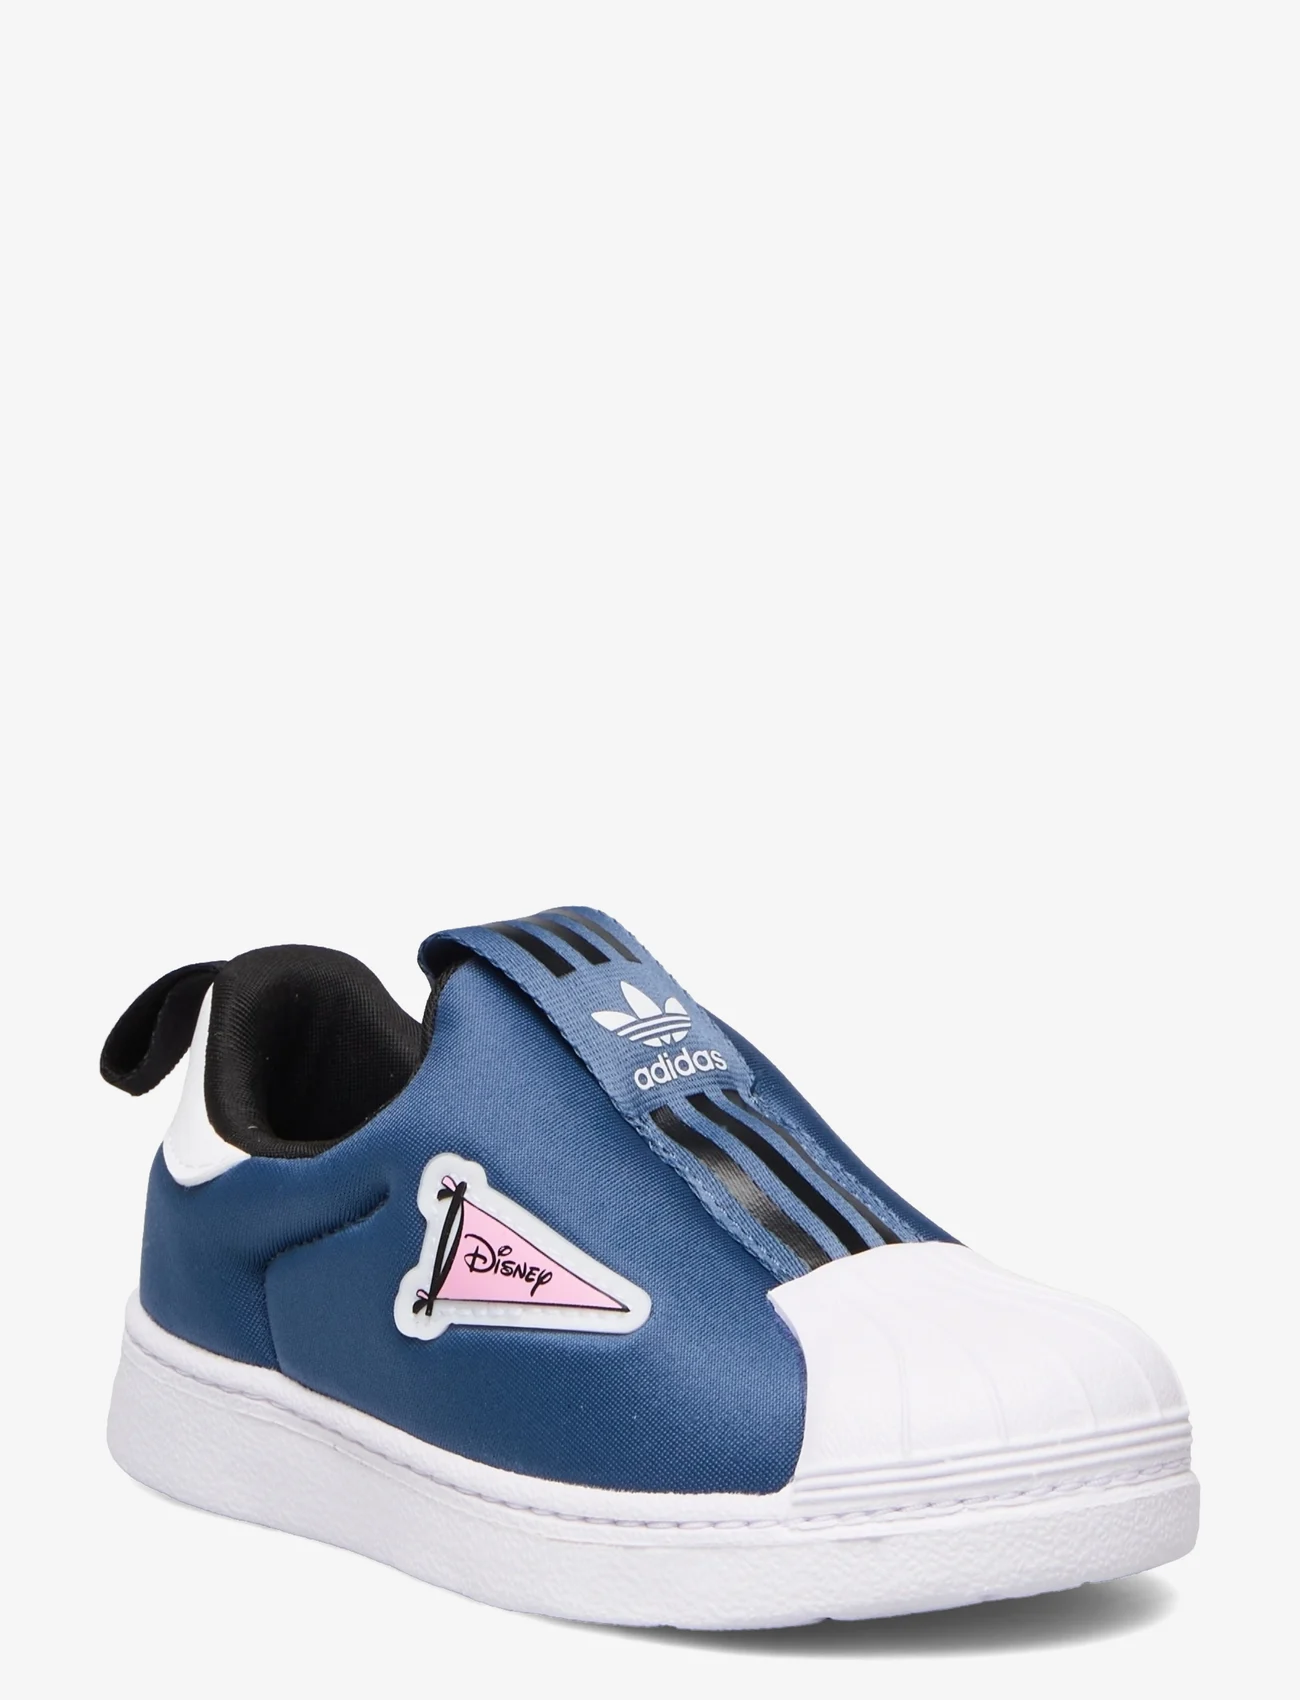 Specific local Healthy adidas Originals Adidas X Disney Superstar 360 X Shoes - Low Tops |  Boozt.com